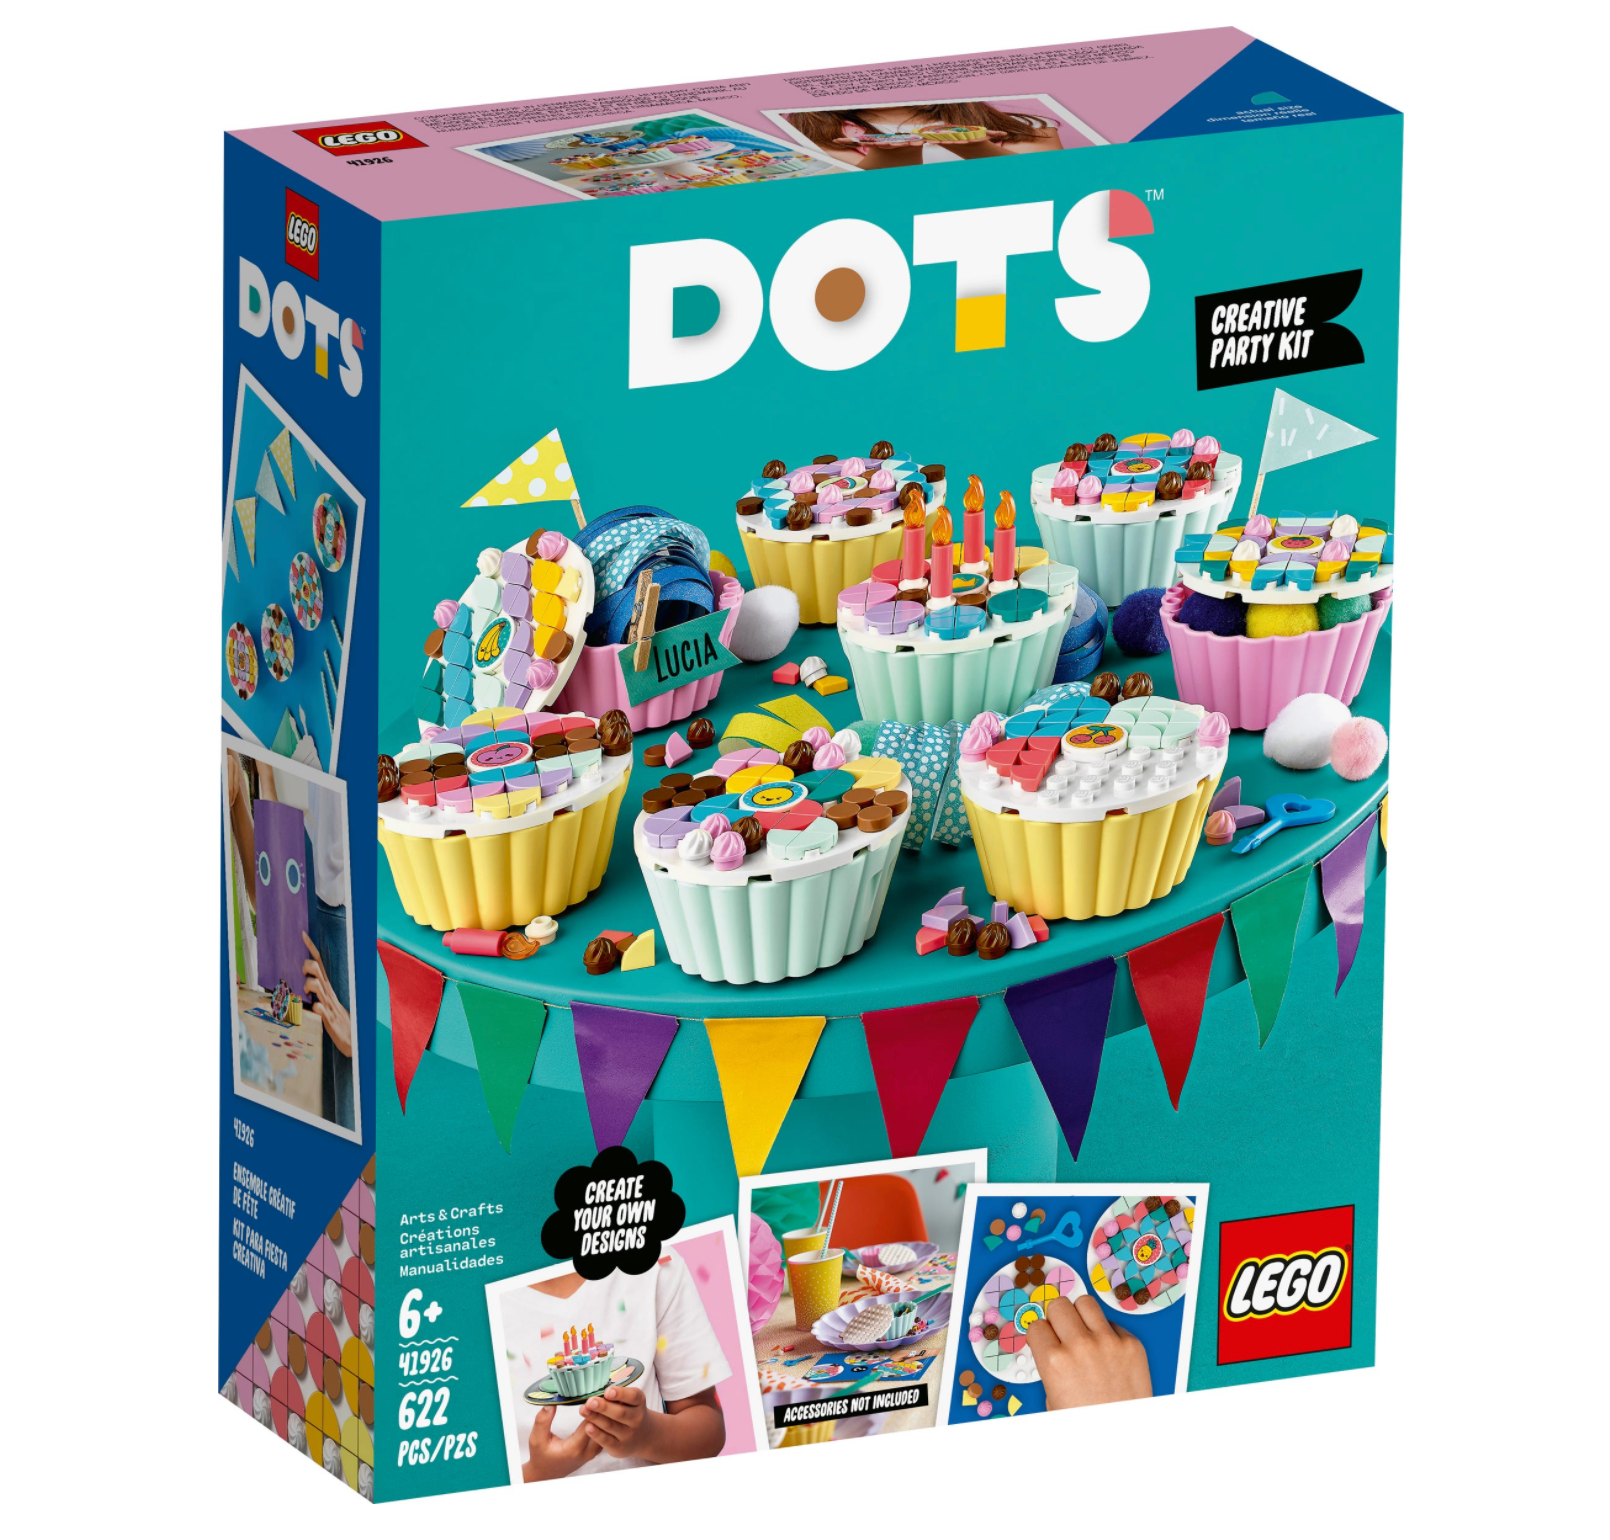 LEGO: DOTS - Creative Party Kit